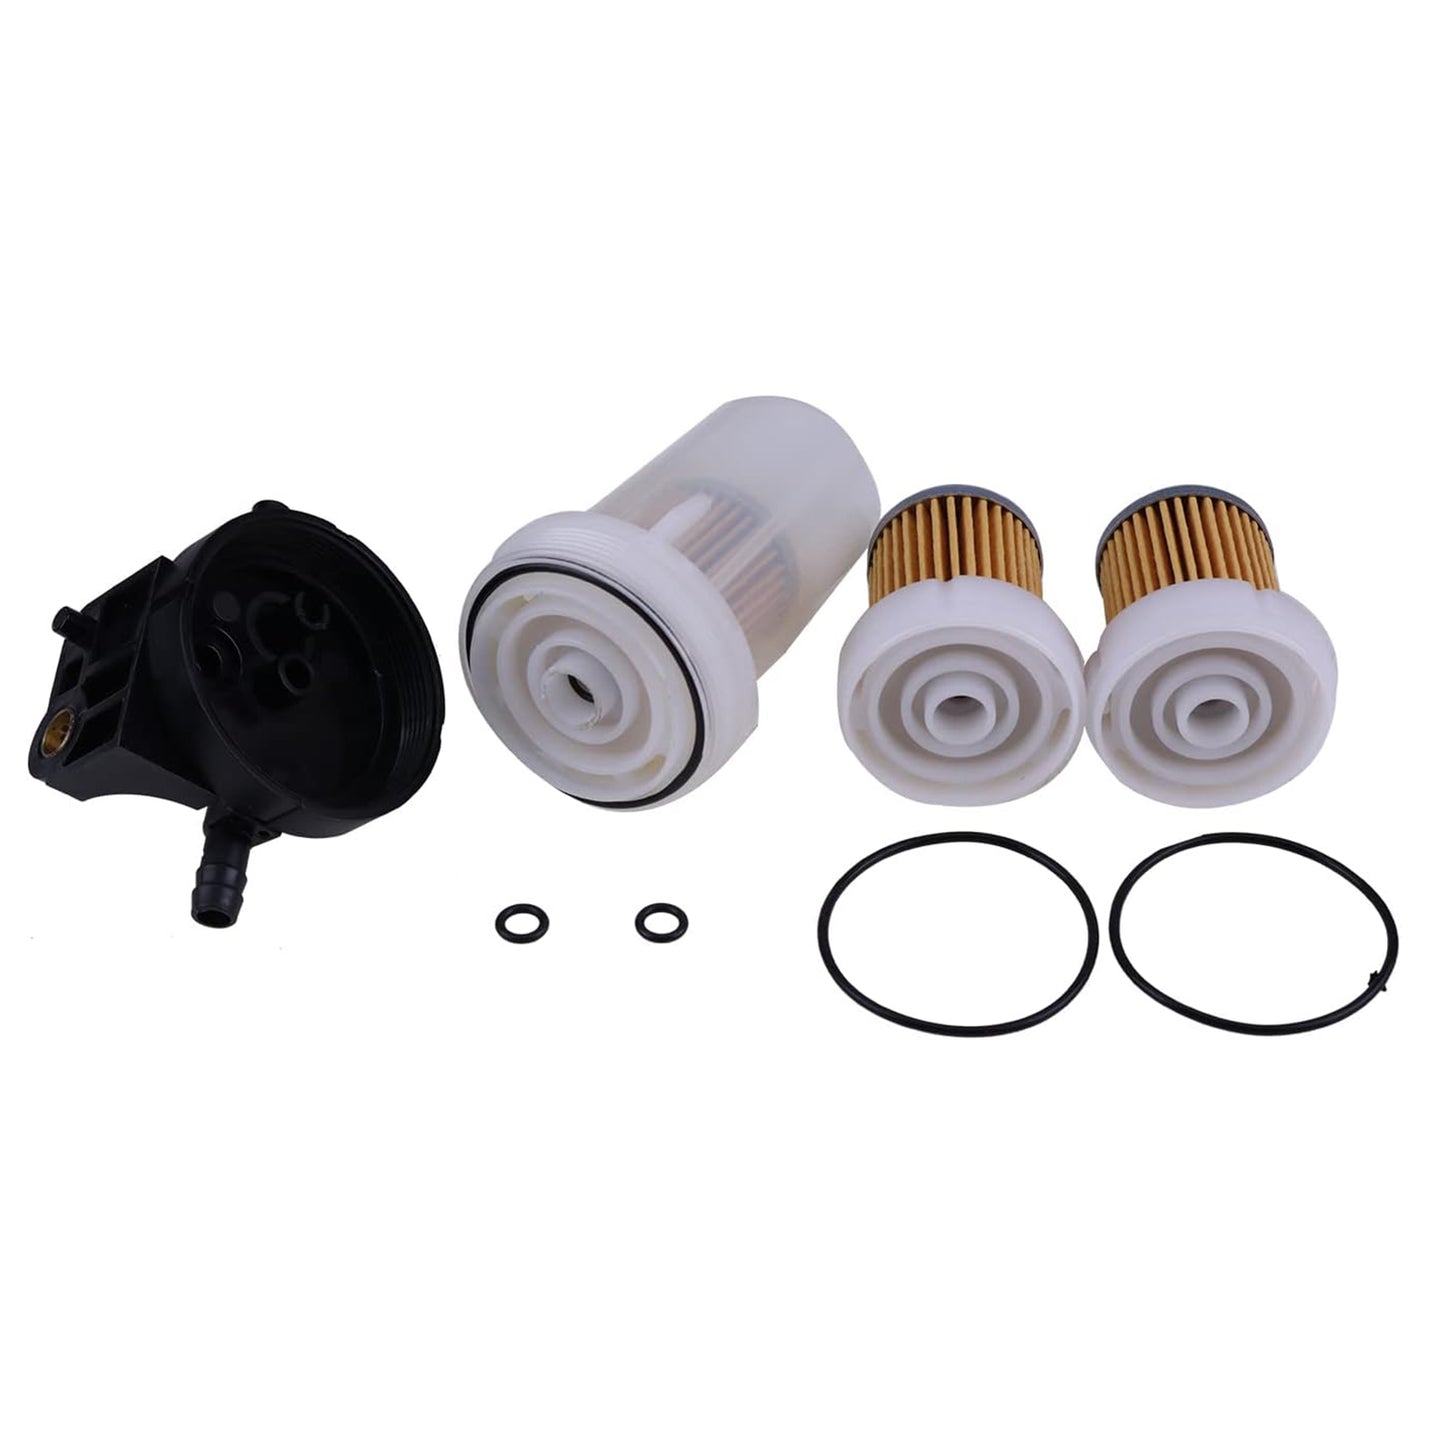 Fuel Filter Assembly & 2pcs Filter 6A320-59930 Compatible With Kubota L2501 L2800 L3200 L3400